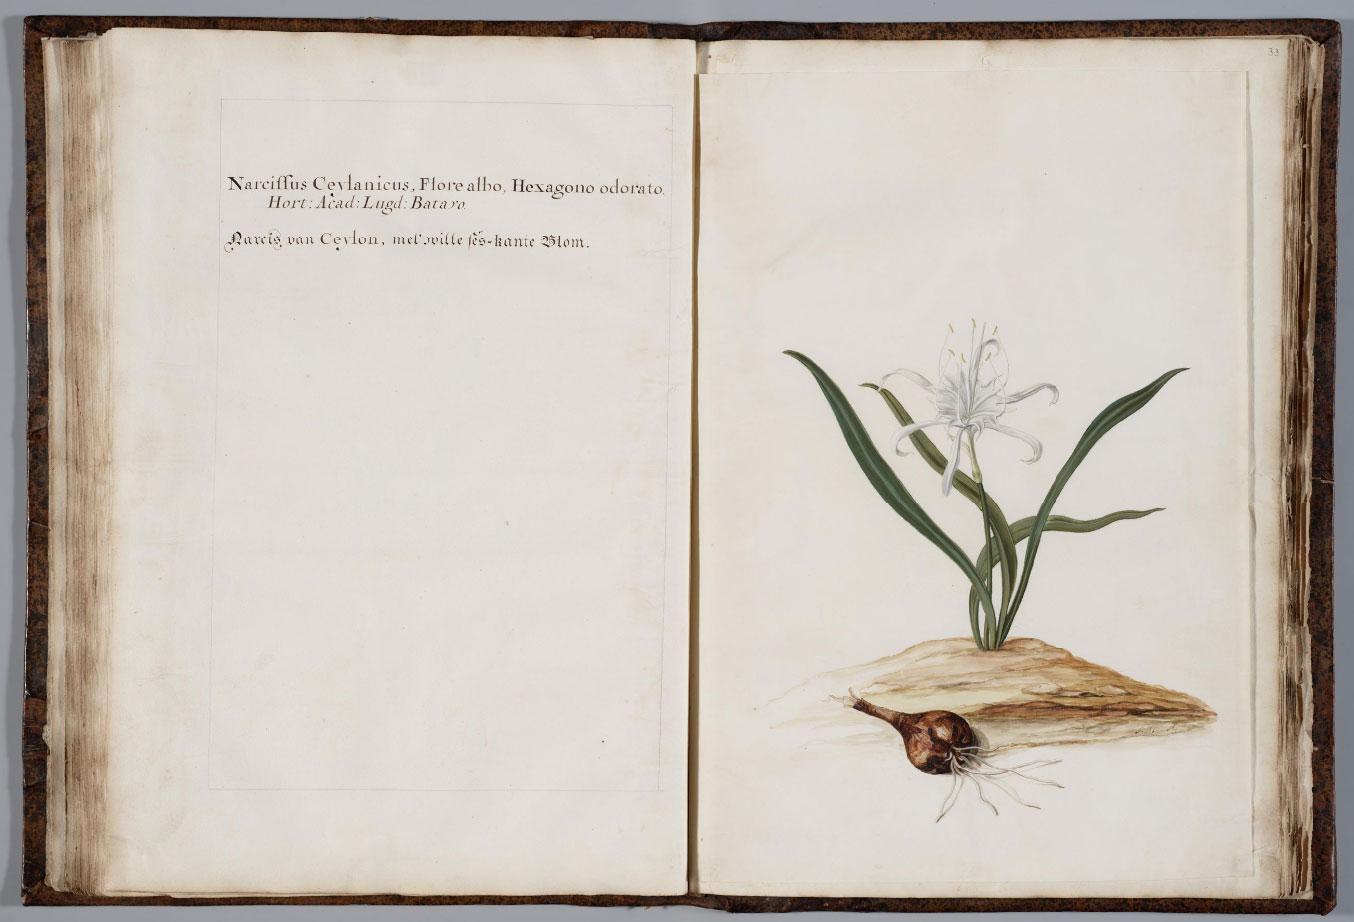 Narcissus Ceylanicus, Flore albo, Hexagono odorato. Moninckx Atlas, vol. I, Amsterdam, ca. 1687-1690, Allard Pierson Museum, Amsterdam.